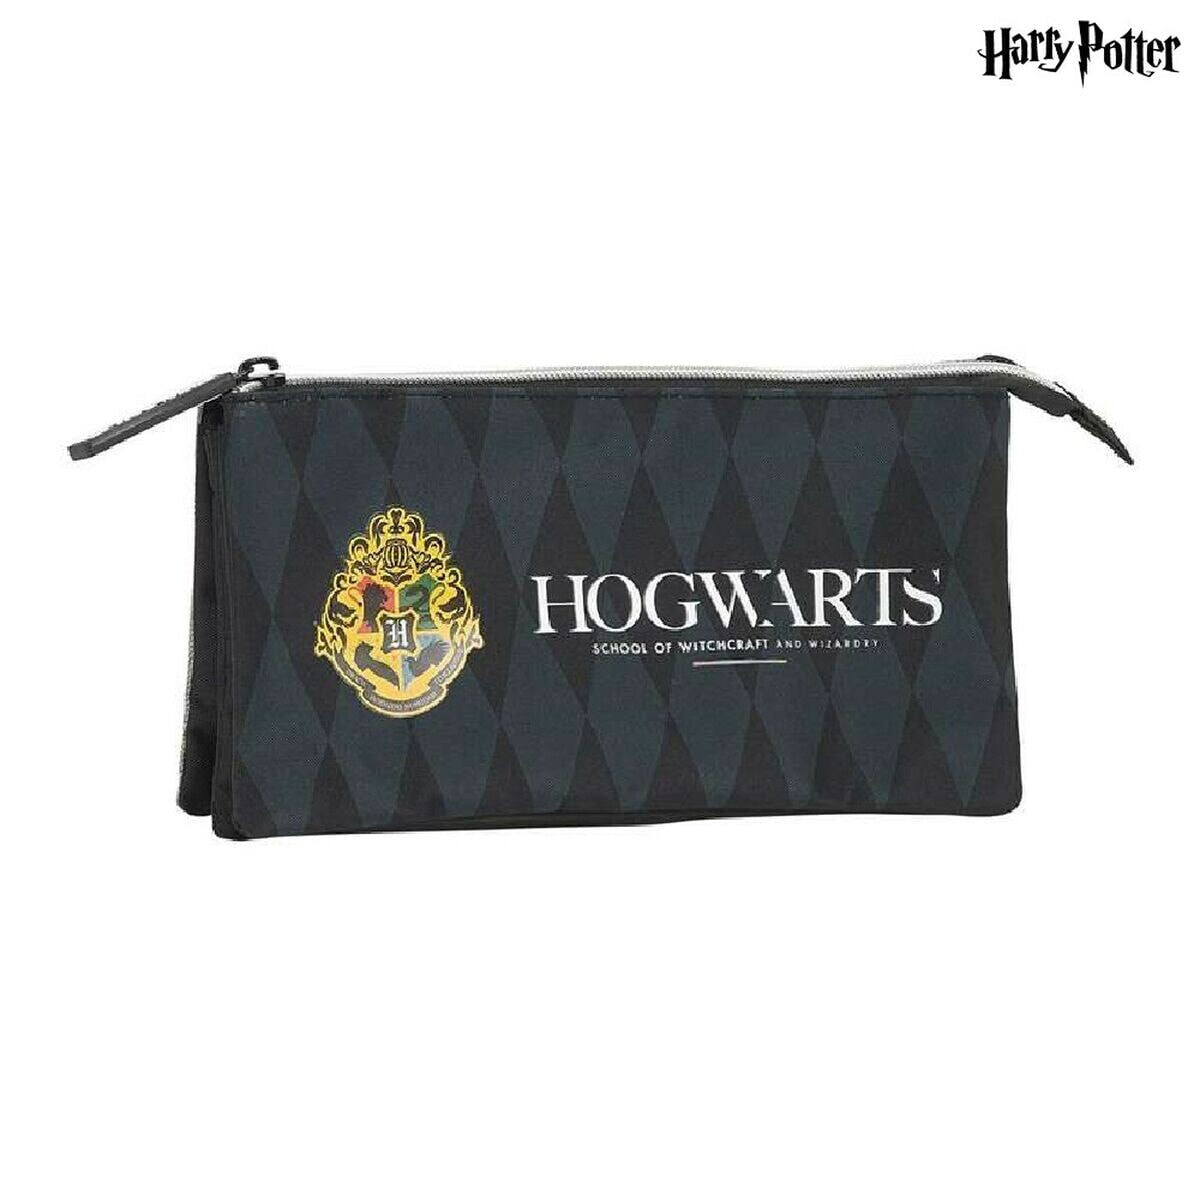 Holdall Harry Potter Hogwarts Triple Harry Potter Black Grey (22 x 12 x 3 cm) (22 x 3 x 12 cm)